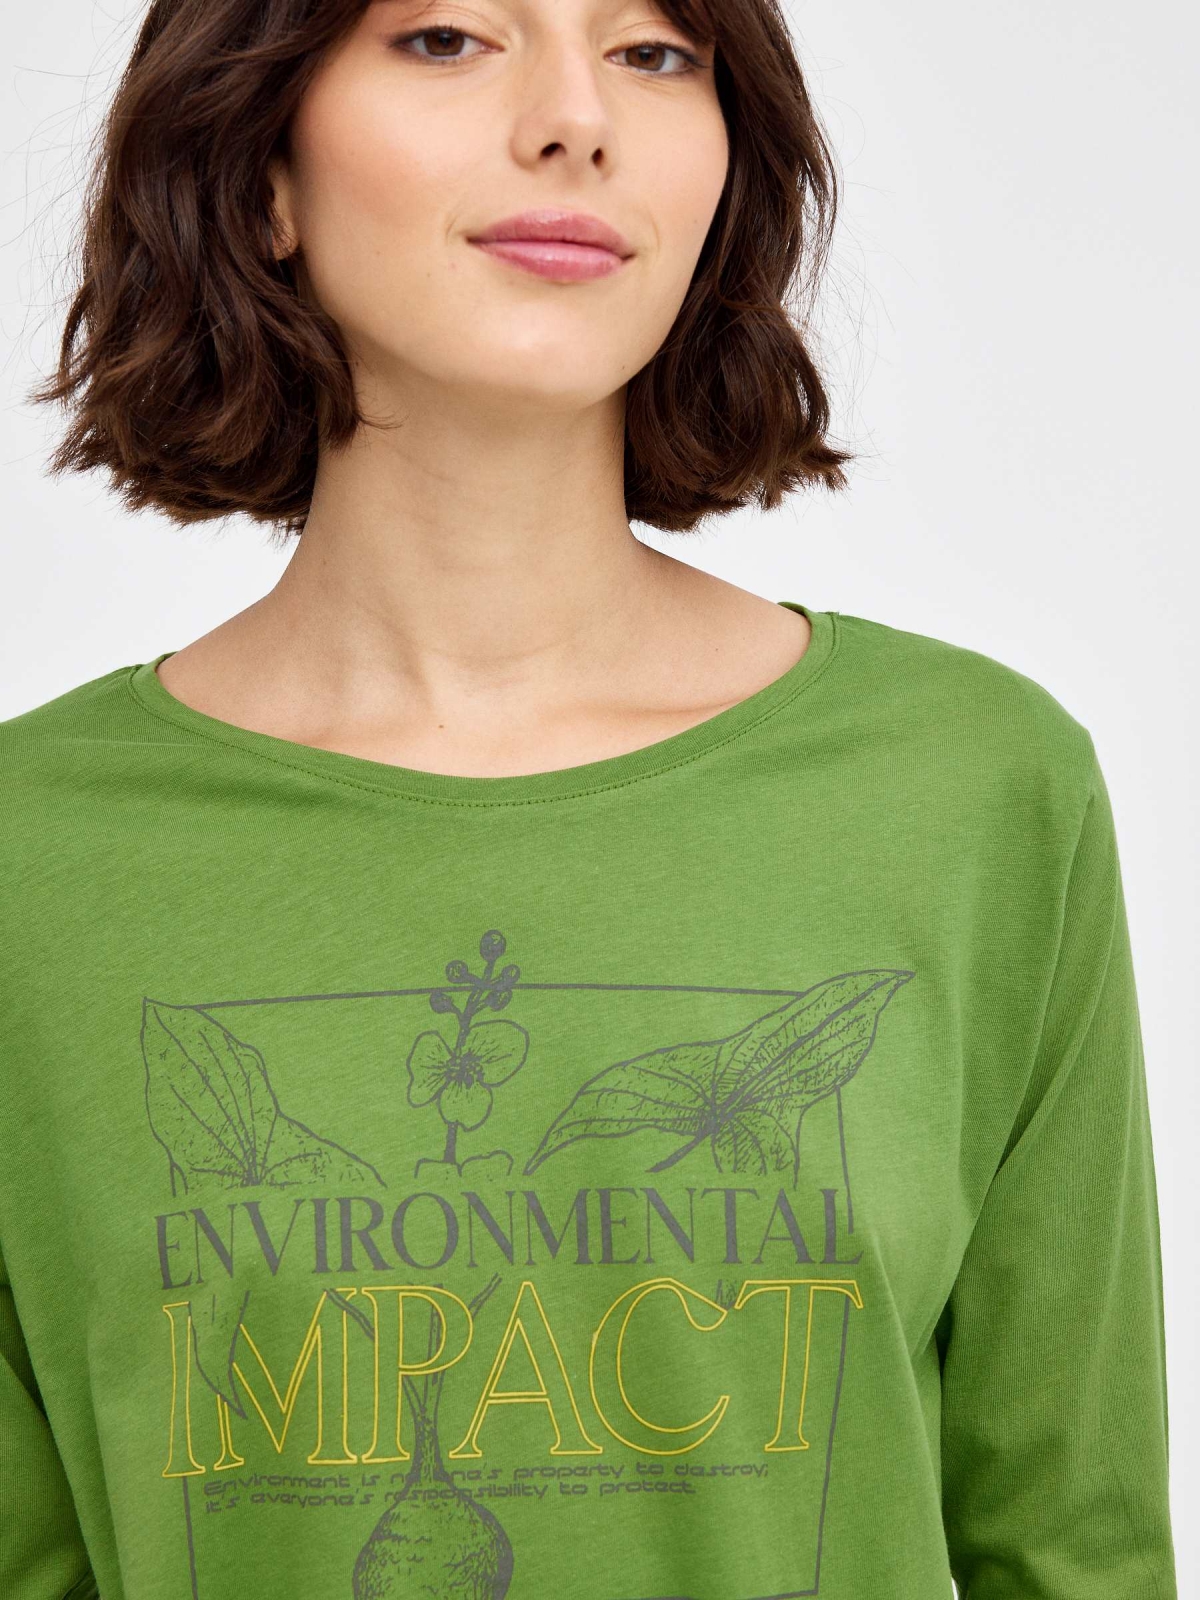 Camiseta Environmental verde oliva vista detalle